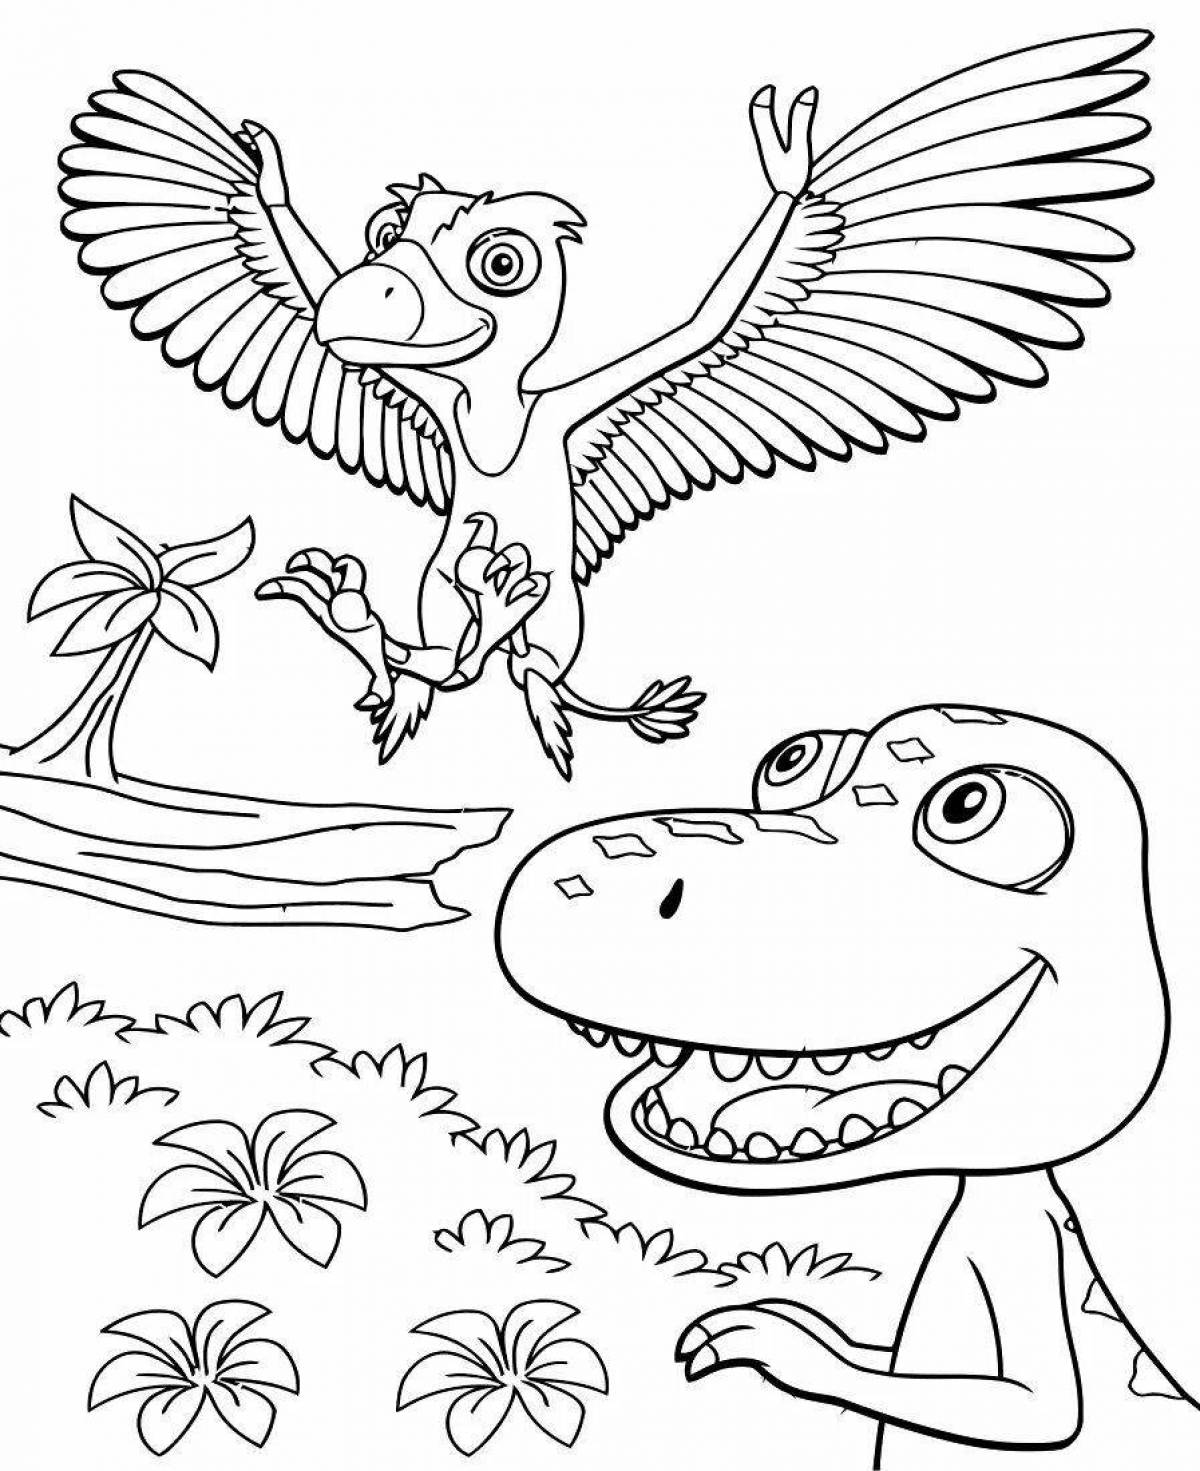 Wonderful cartoon tarbosaurus coloring book